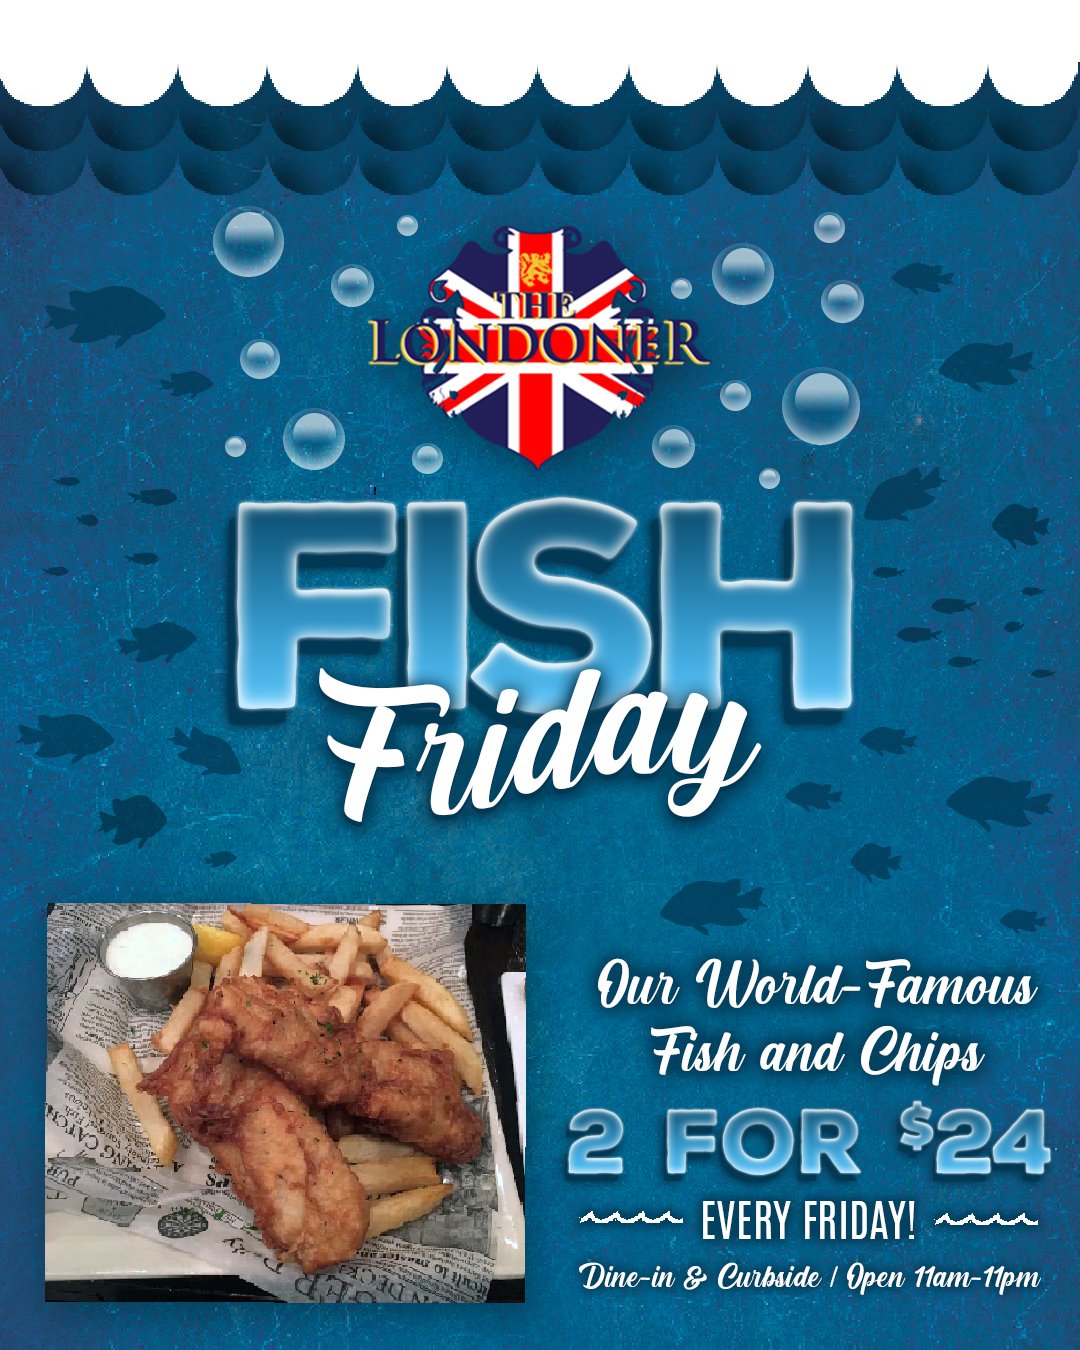 Fish Friday promotion